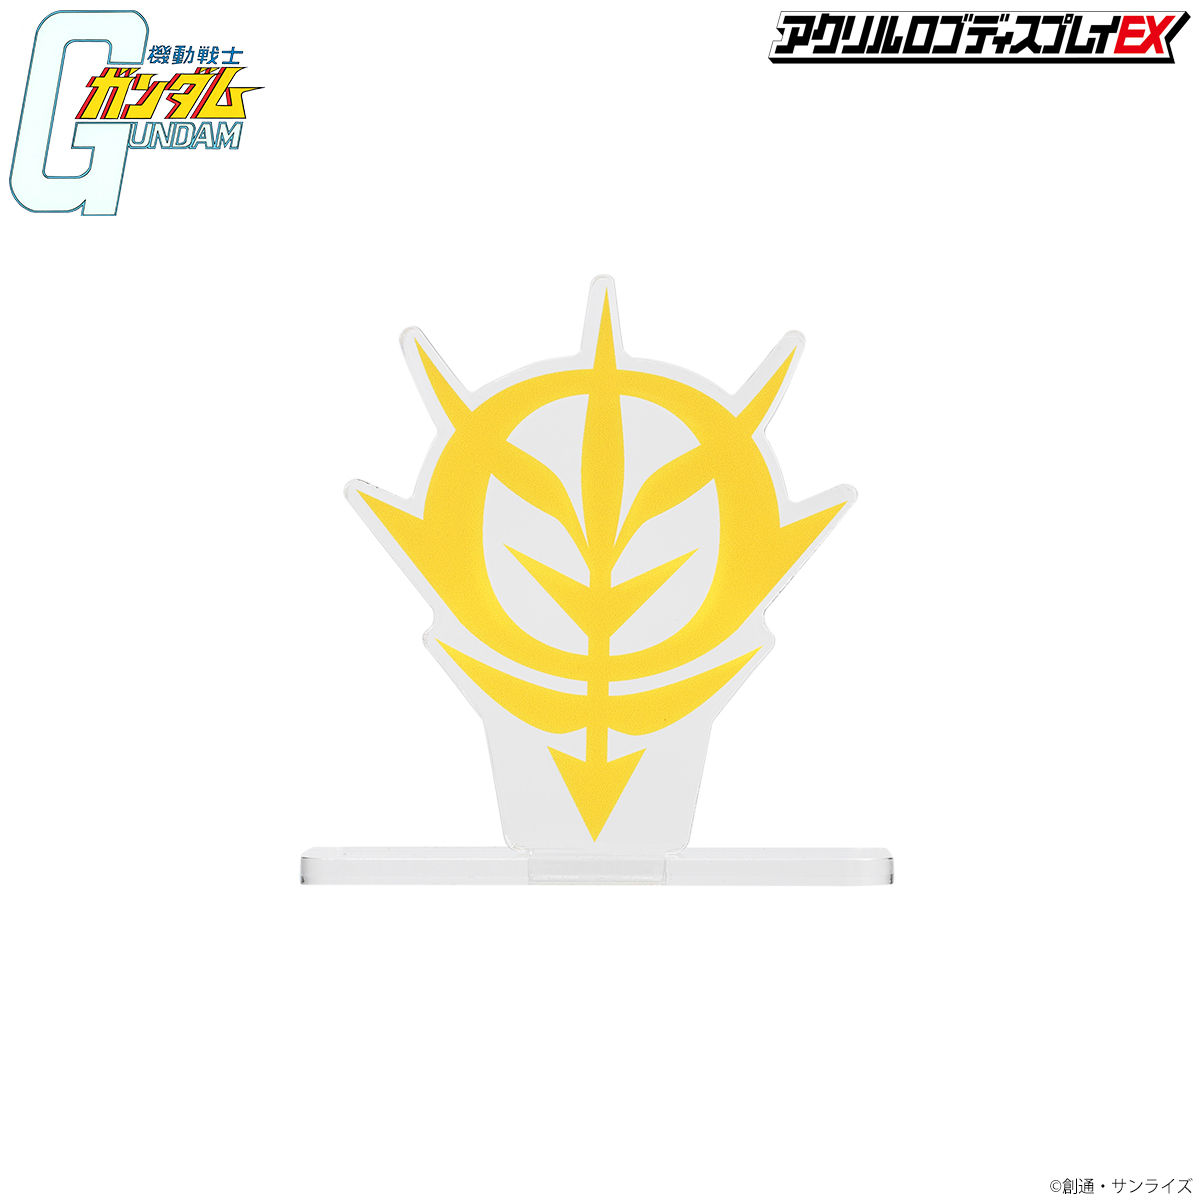 Acrylic Logo Diplay EX-Principality of ZEON Mark(Mobile Suit Gundam)